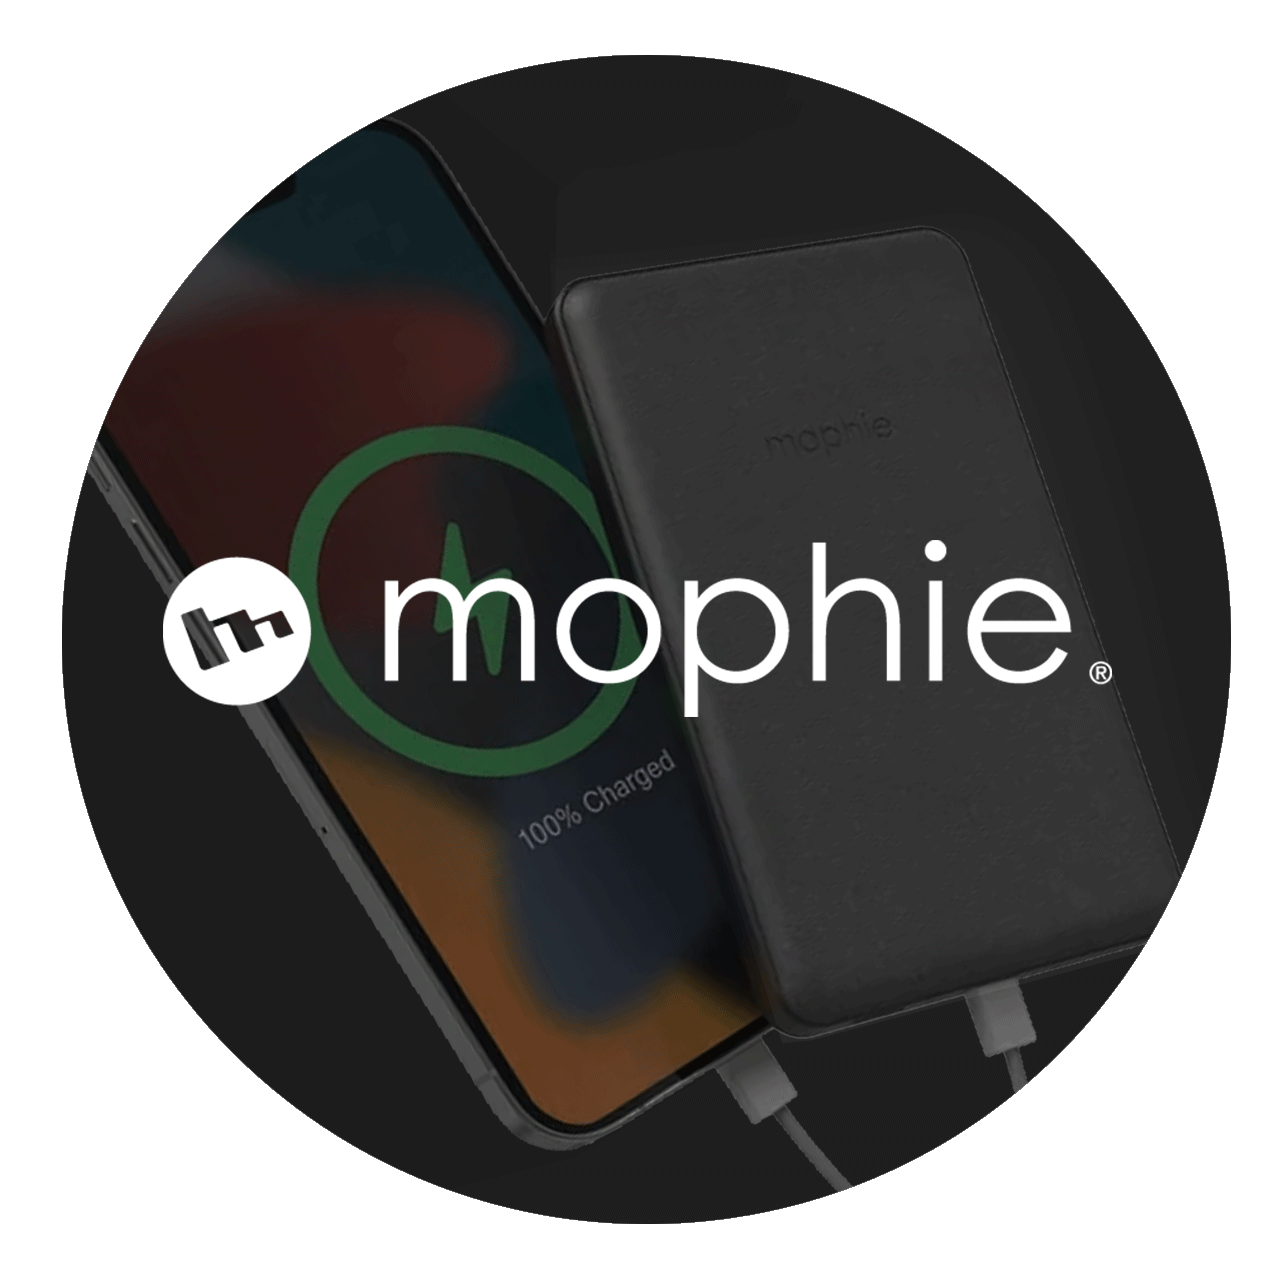 mophie logo lifestyle